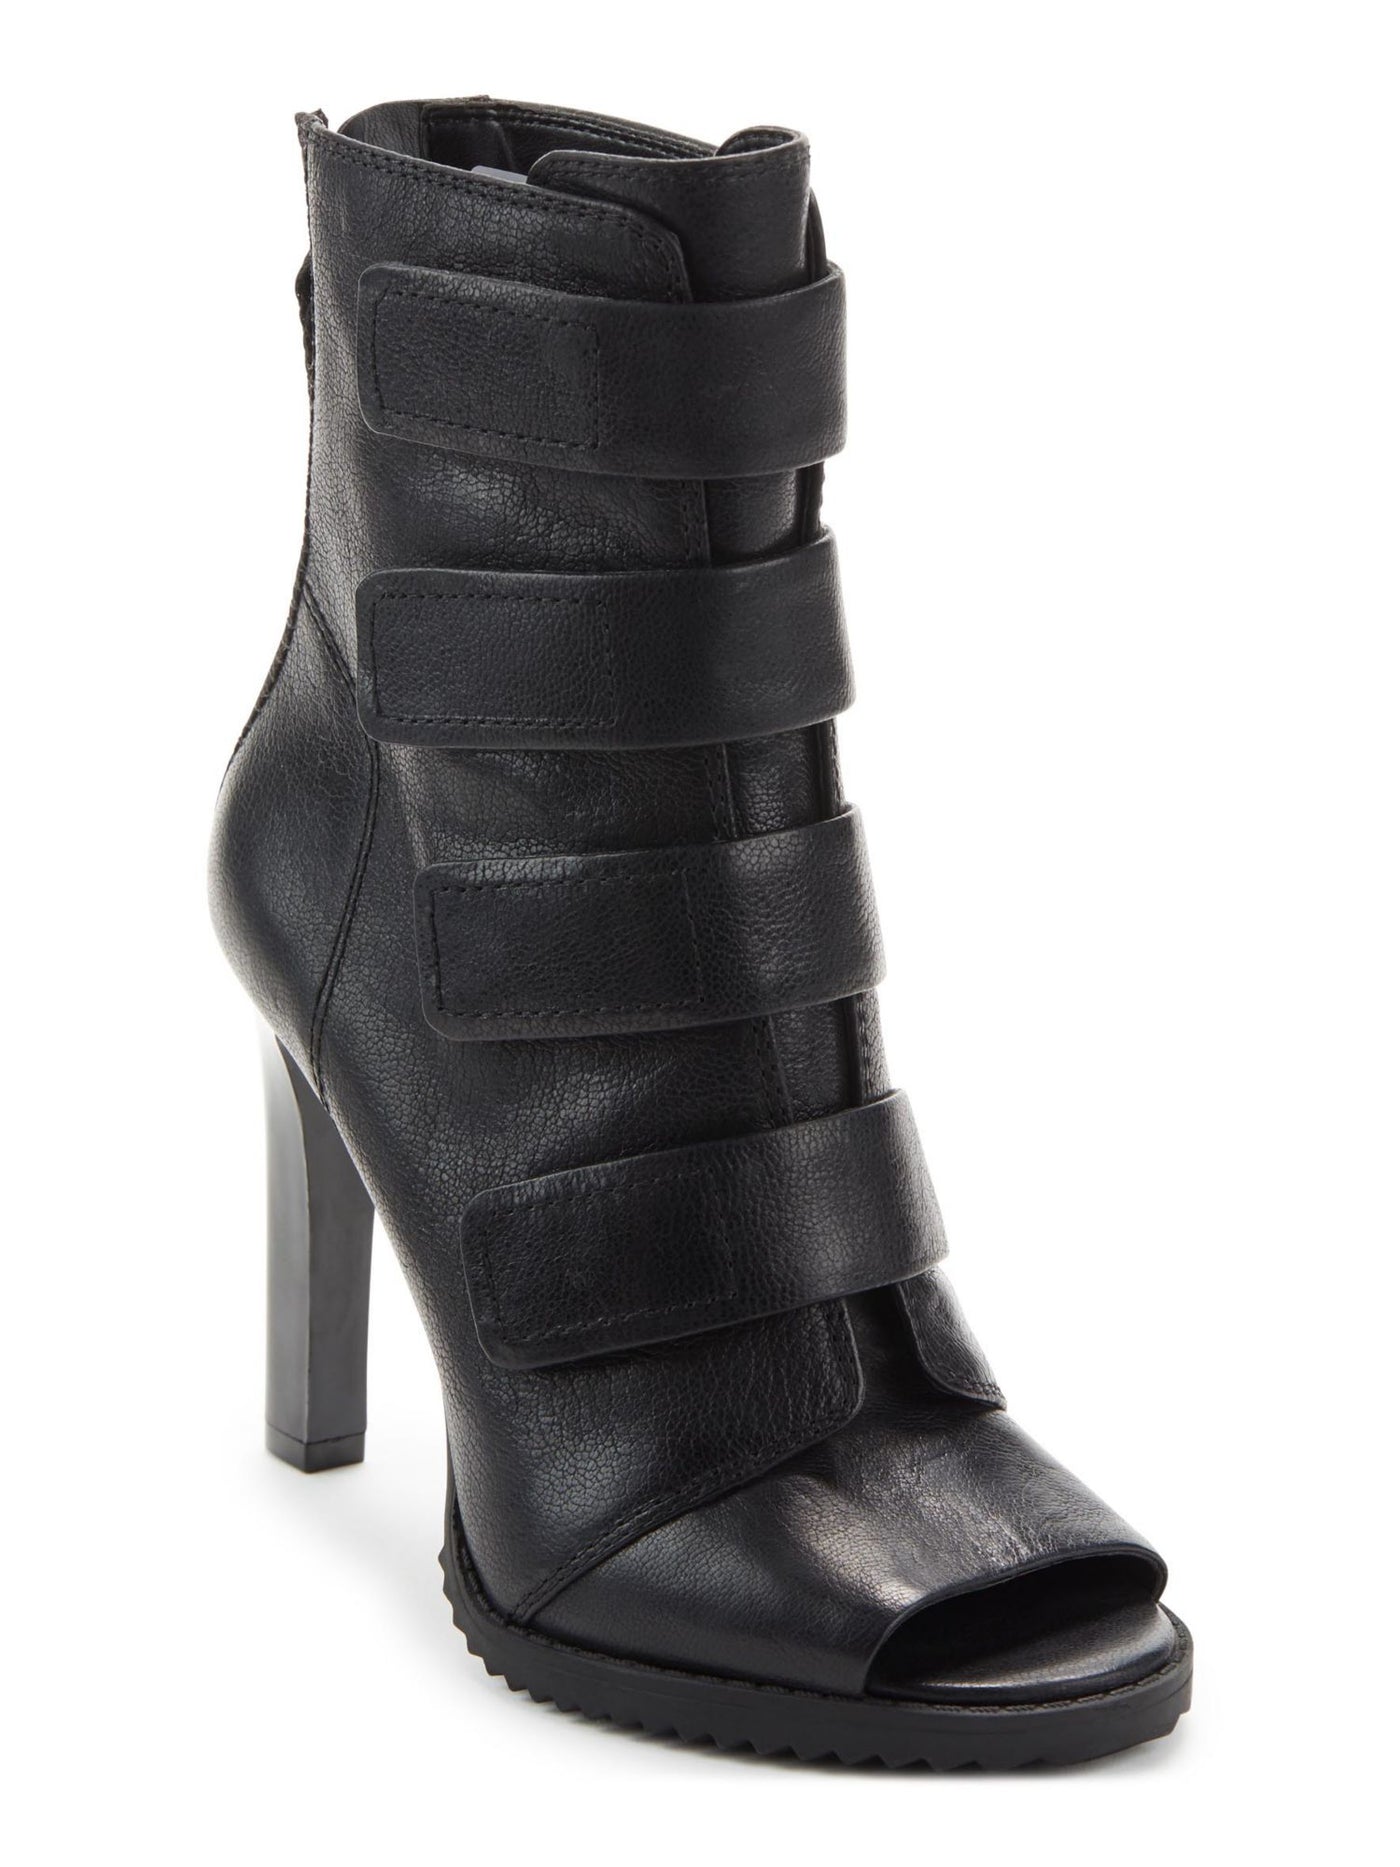 DKNY Womens Black Adjustable Treaded Blake Peep Toe Stiletto Zip-Up Booties 5.5 M